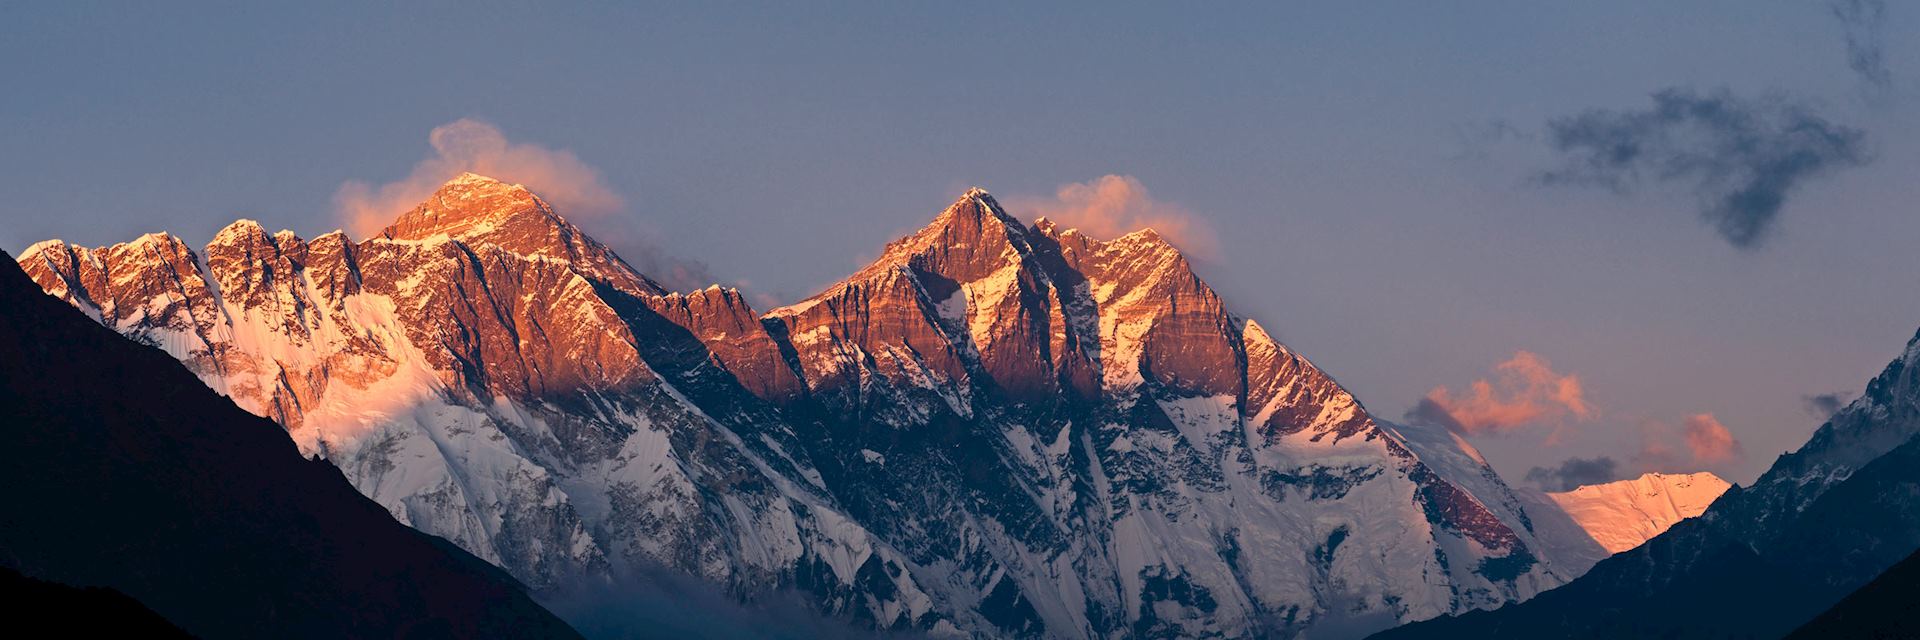 Nuptse Lhotse and the Himalaya